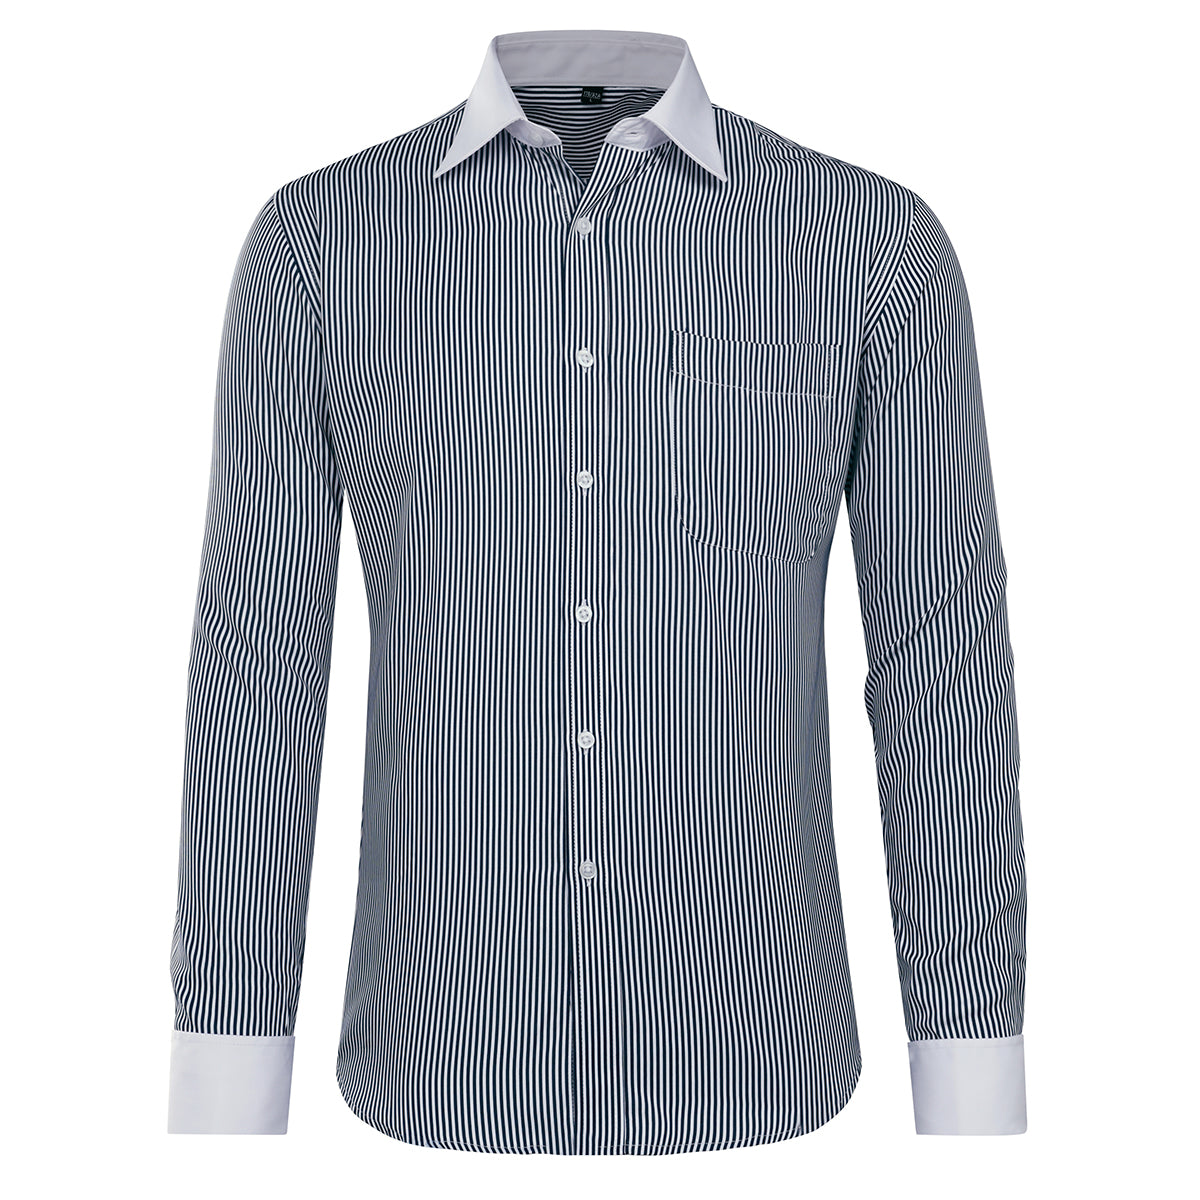 Men's Dress Shirt Slim Fit Button Down Stripe Checked Shirt Black